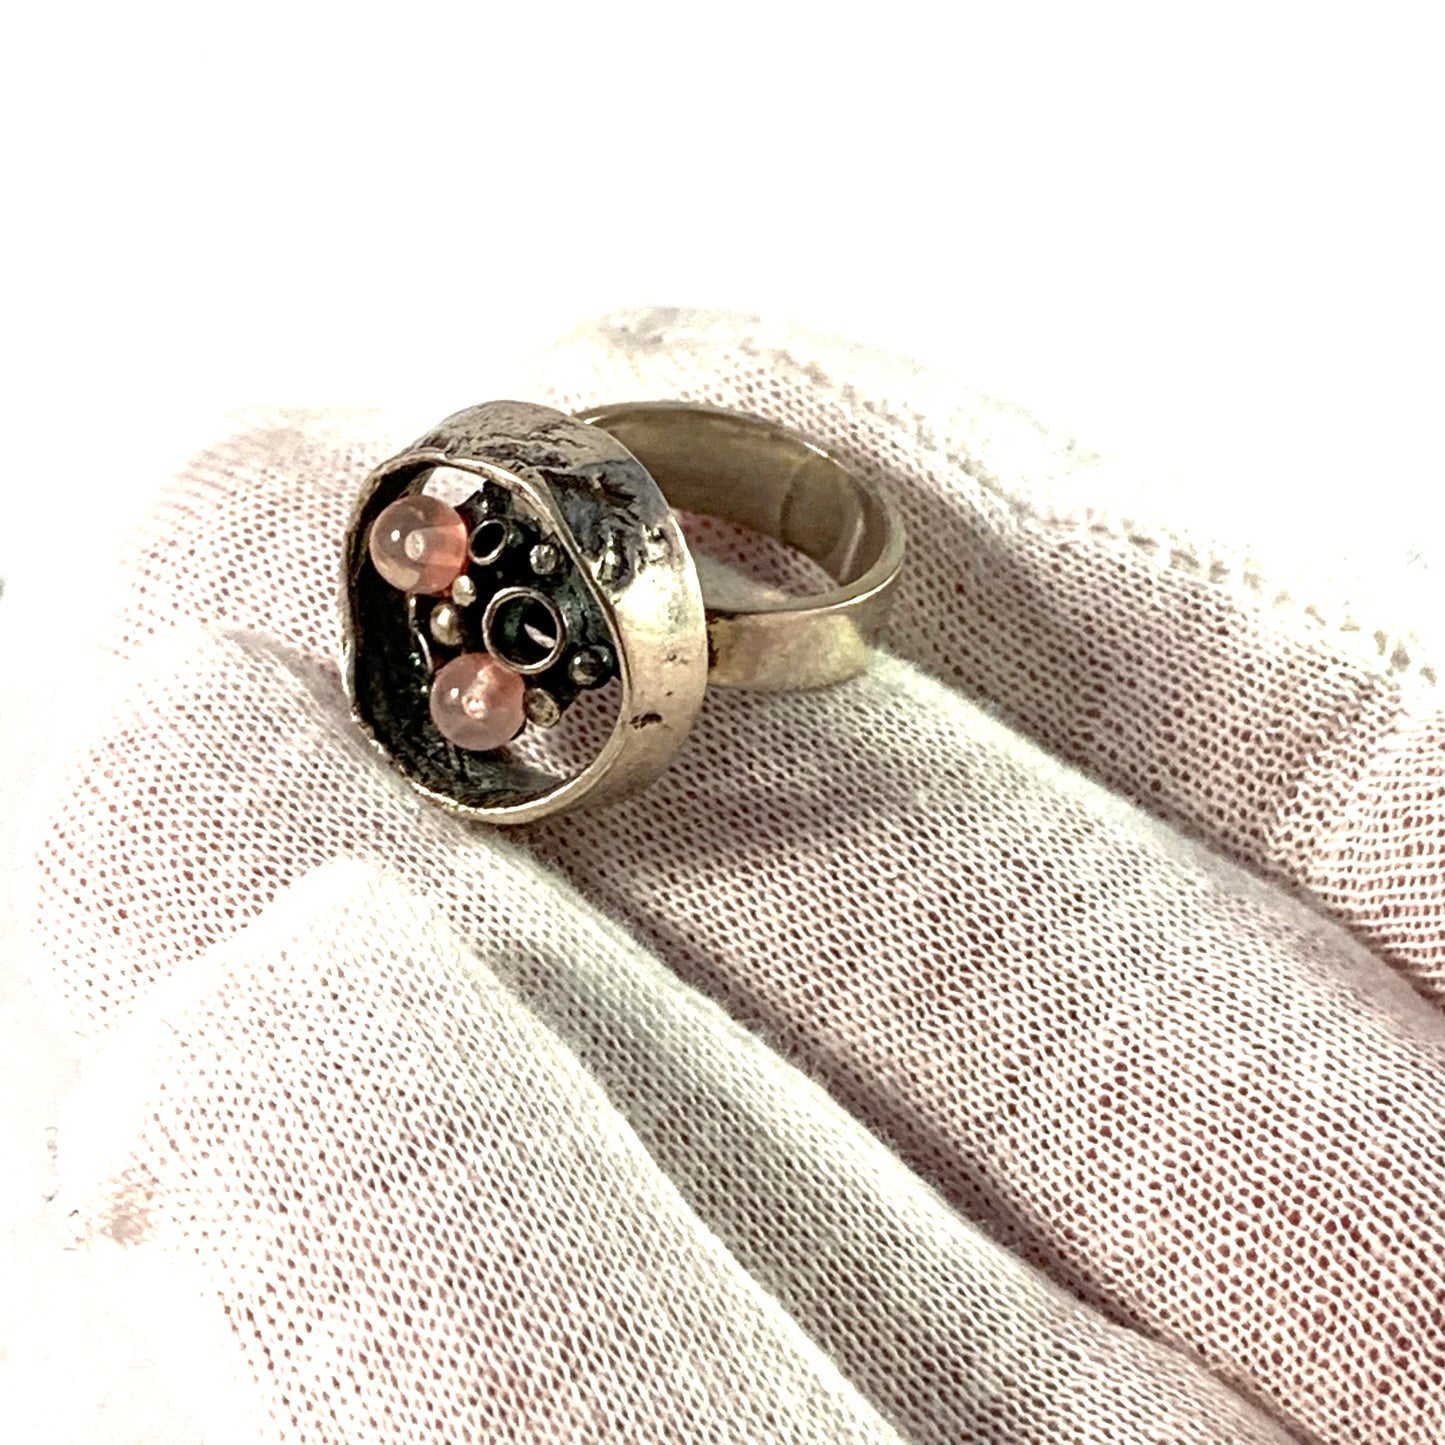 Perli, Germany Modernist Rose Quartz Silver Ring.